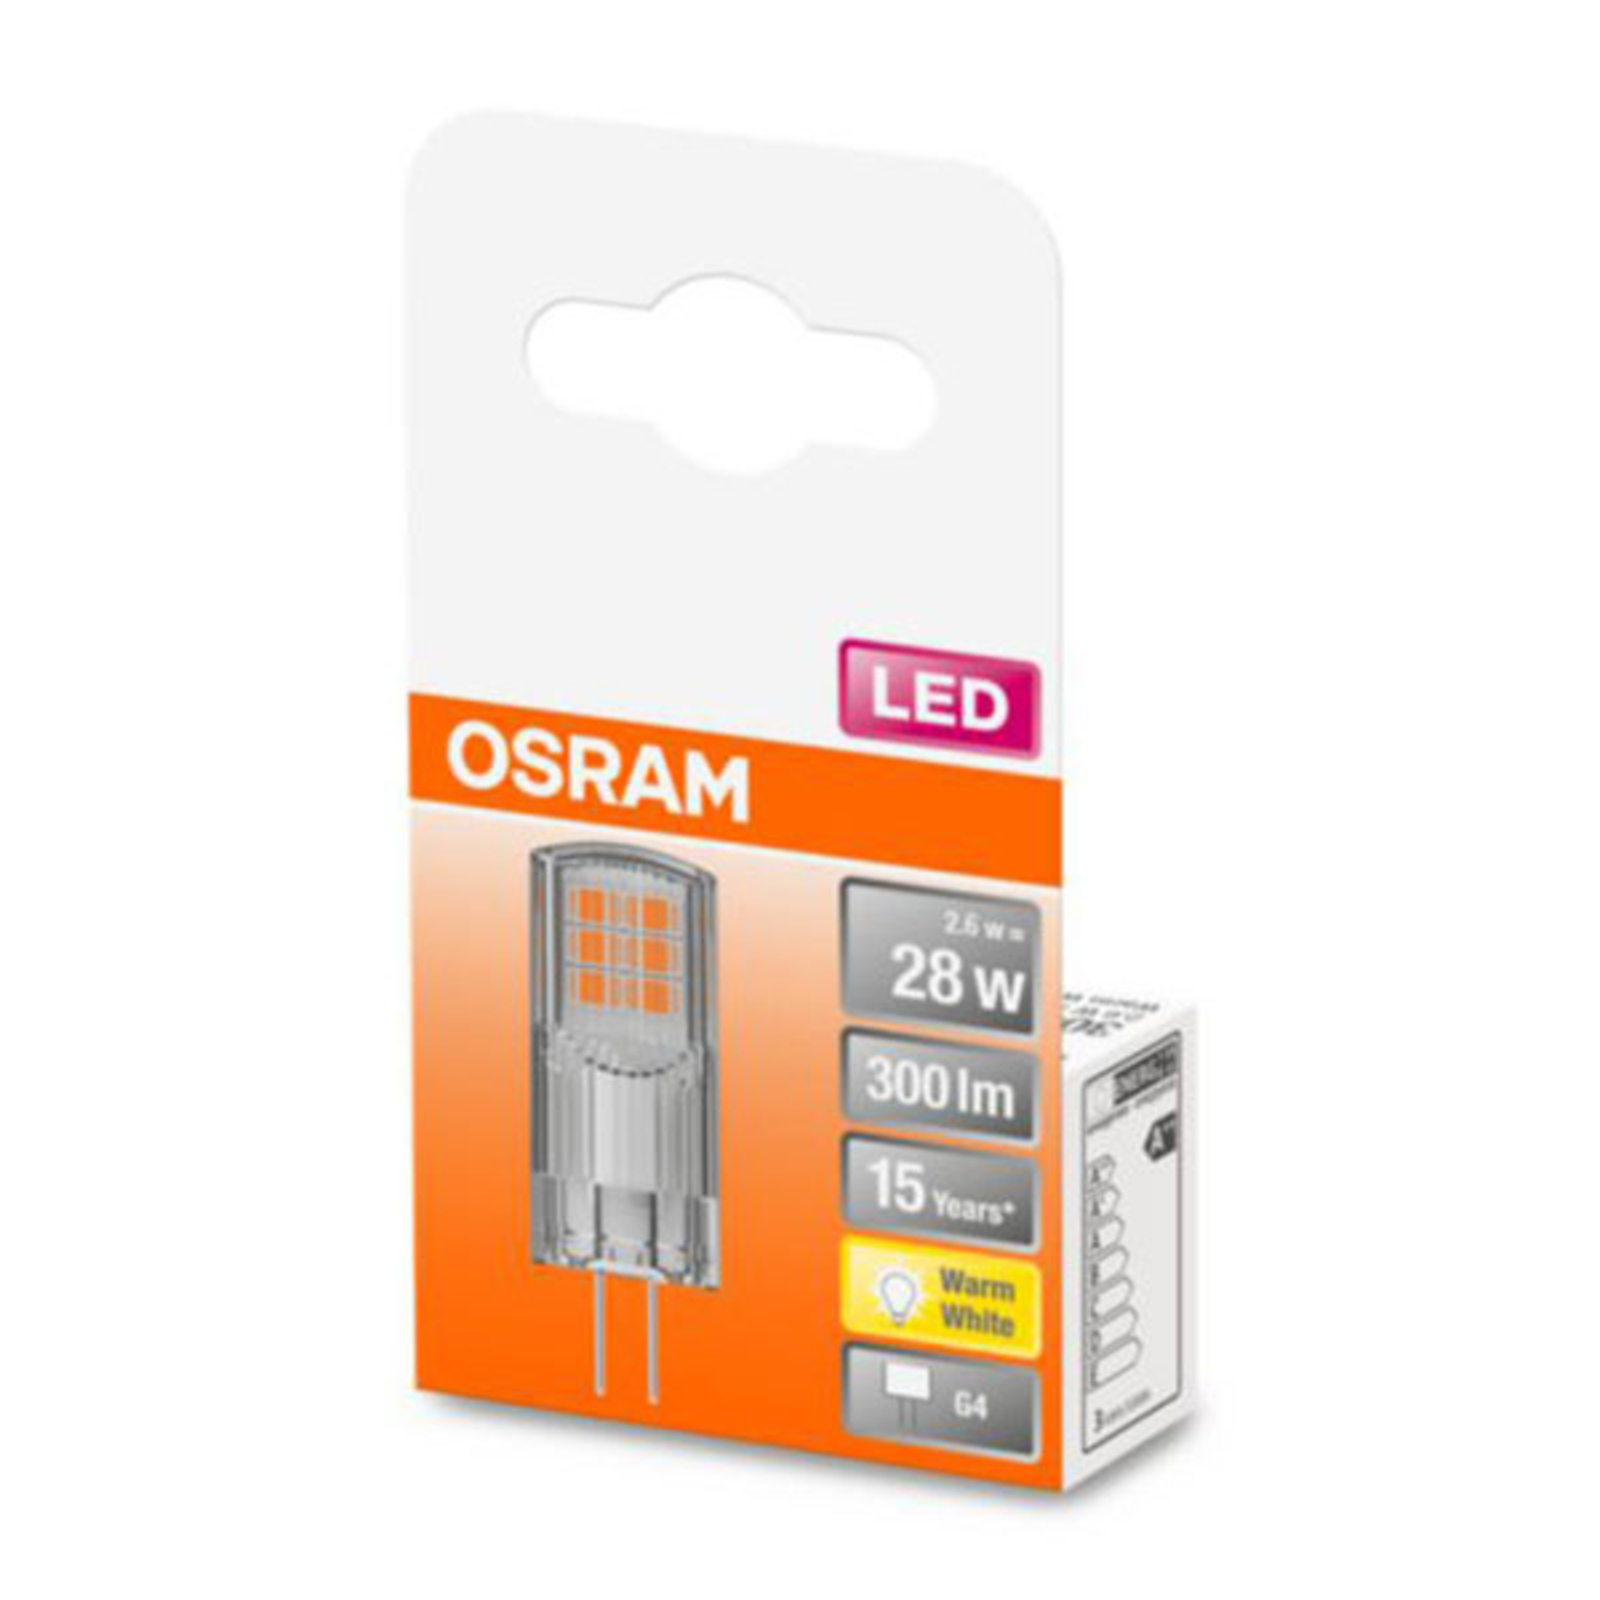 OSRAM LED bispina G4 2,6W, bianco caldo, 300 lm